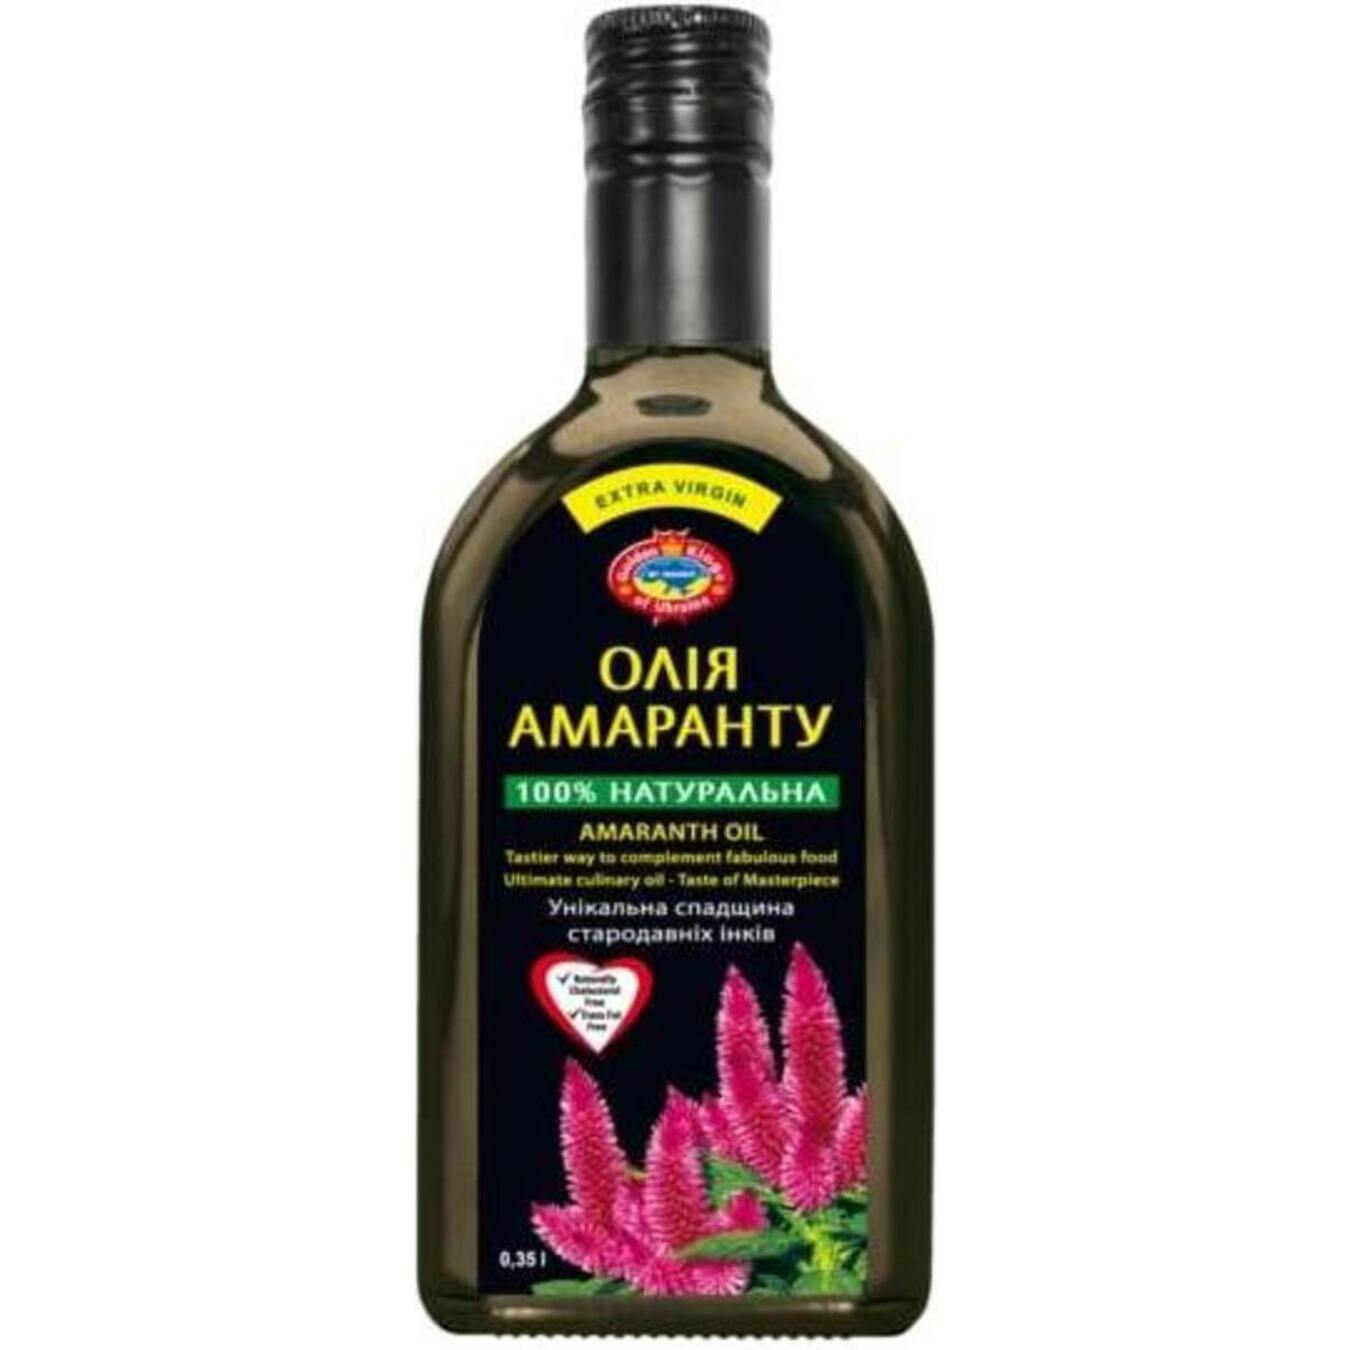 Amaranth oil Golden Kings of Ukraine amaranth oil extract 0.35 l 2